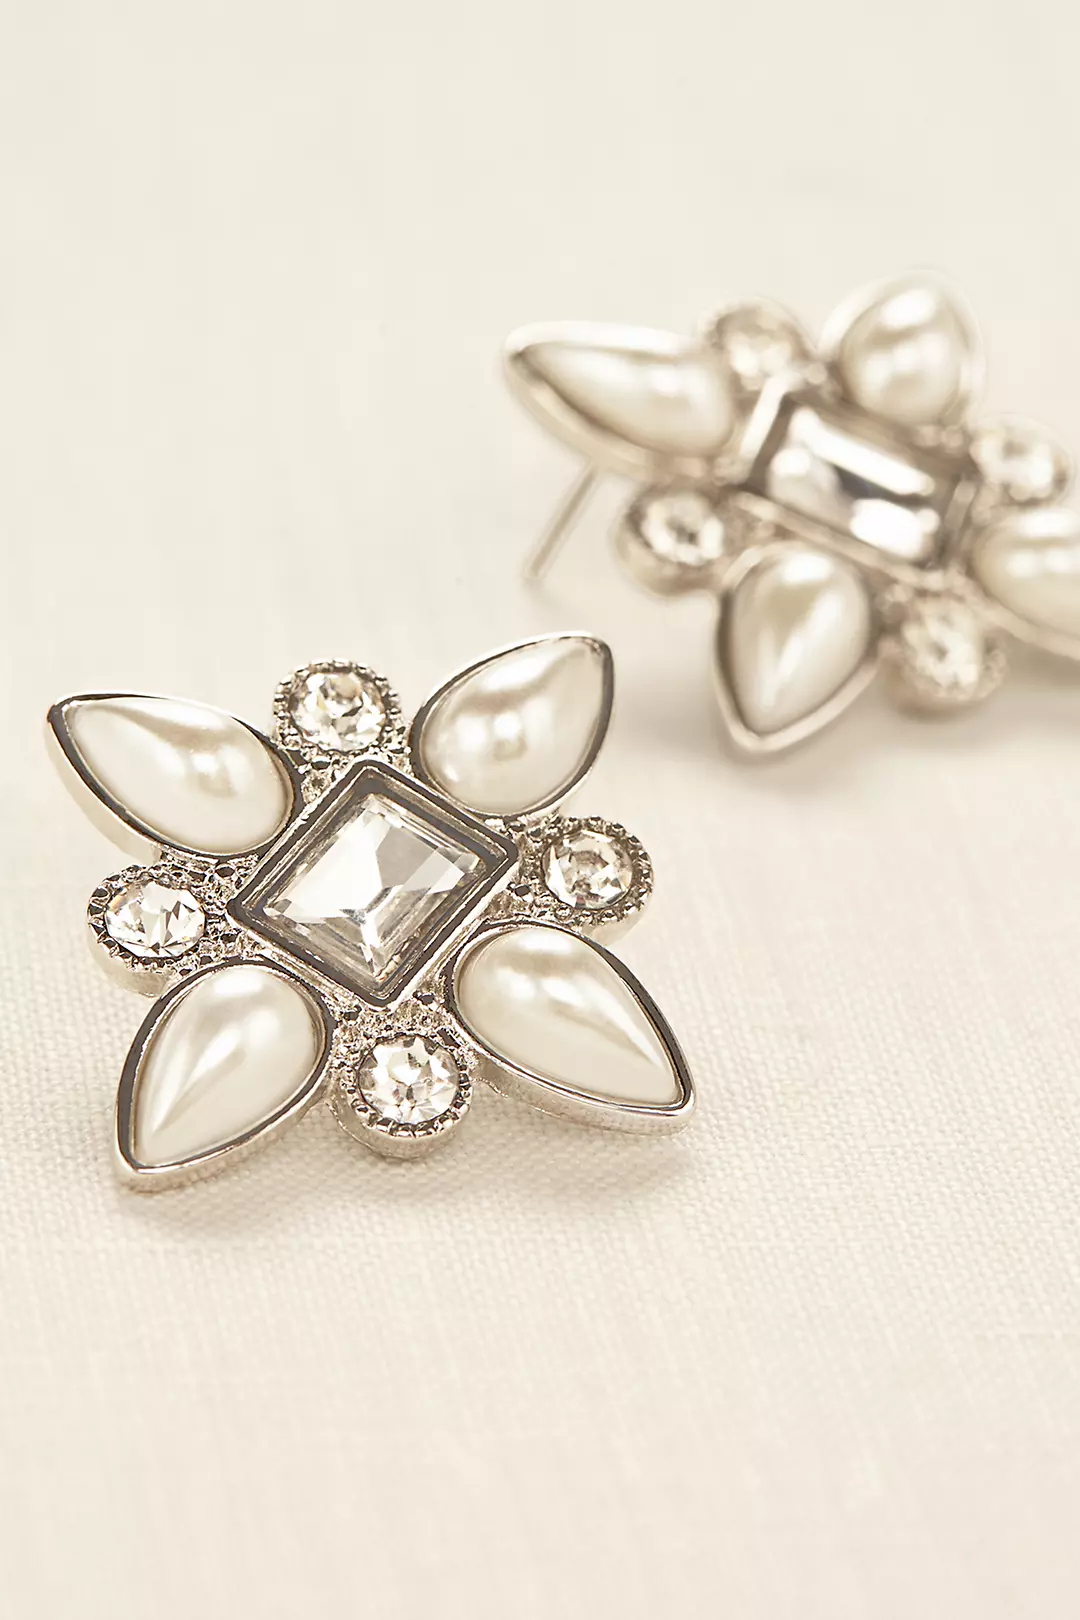 Emerald Cut Cluster Pearl Earrings Image 2